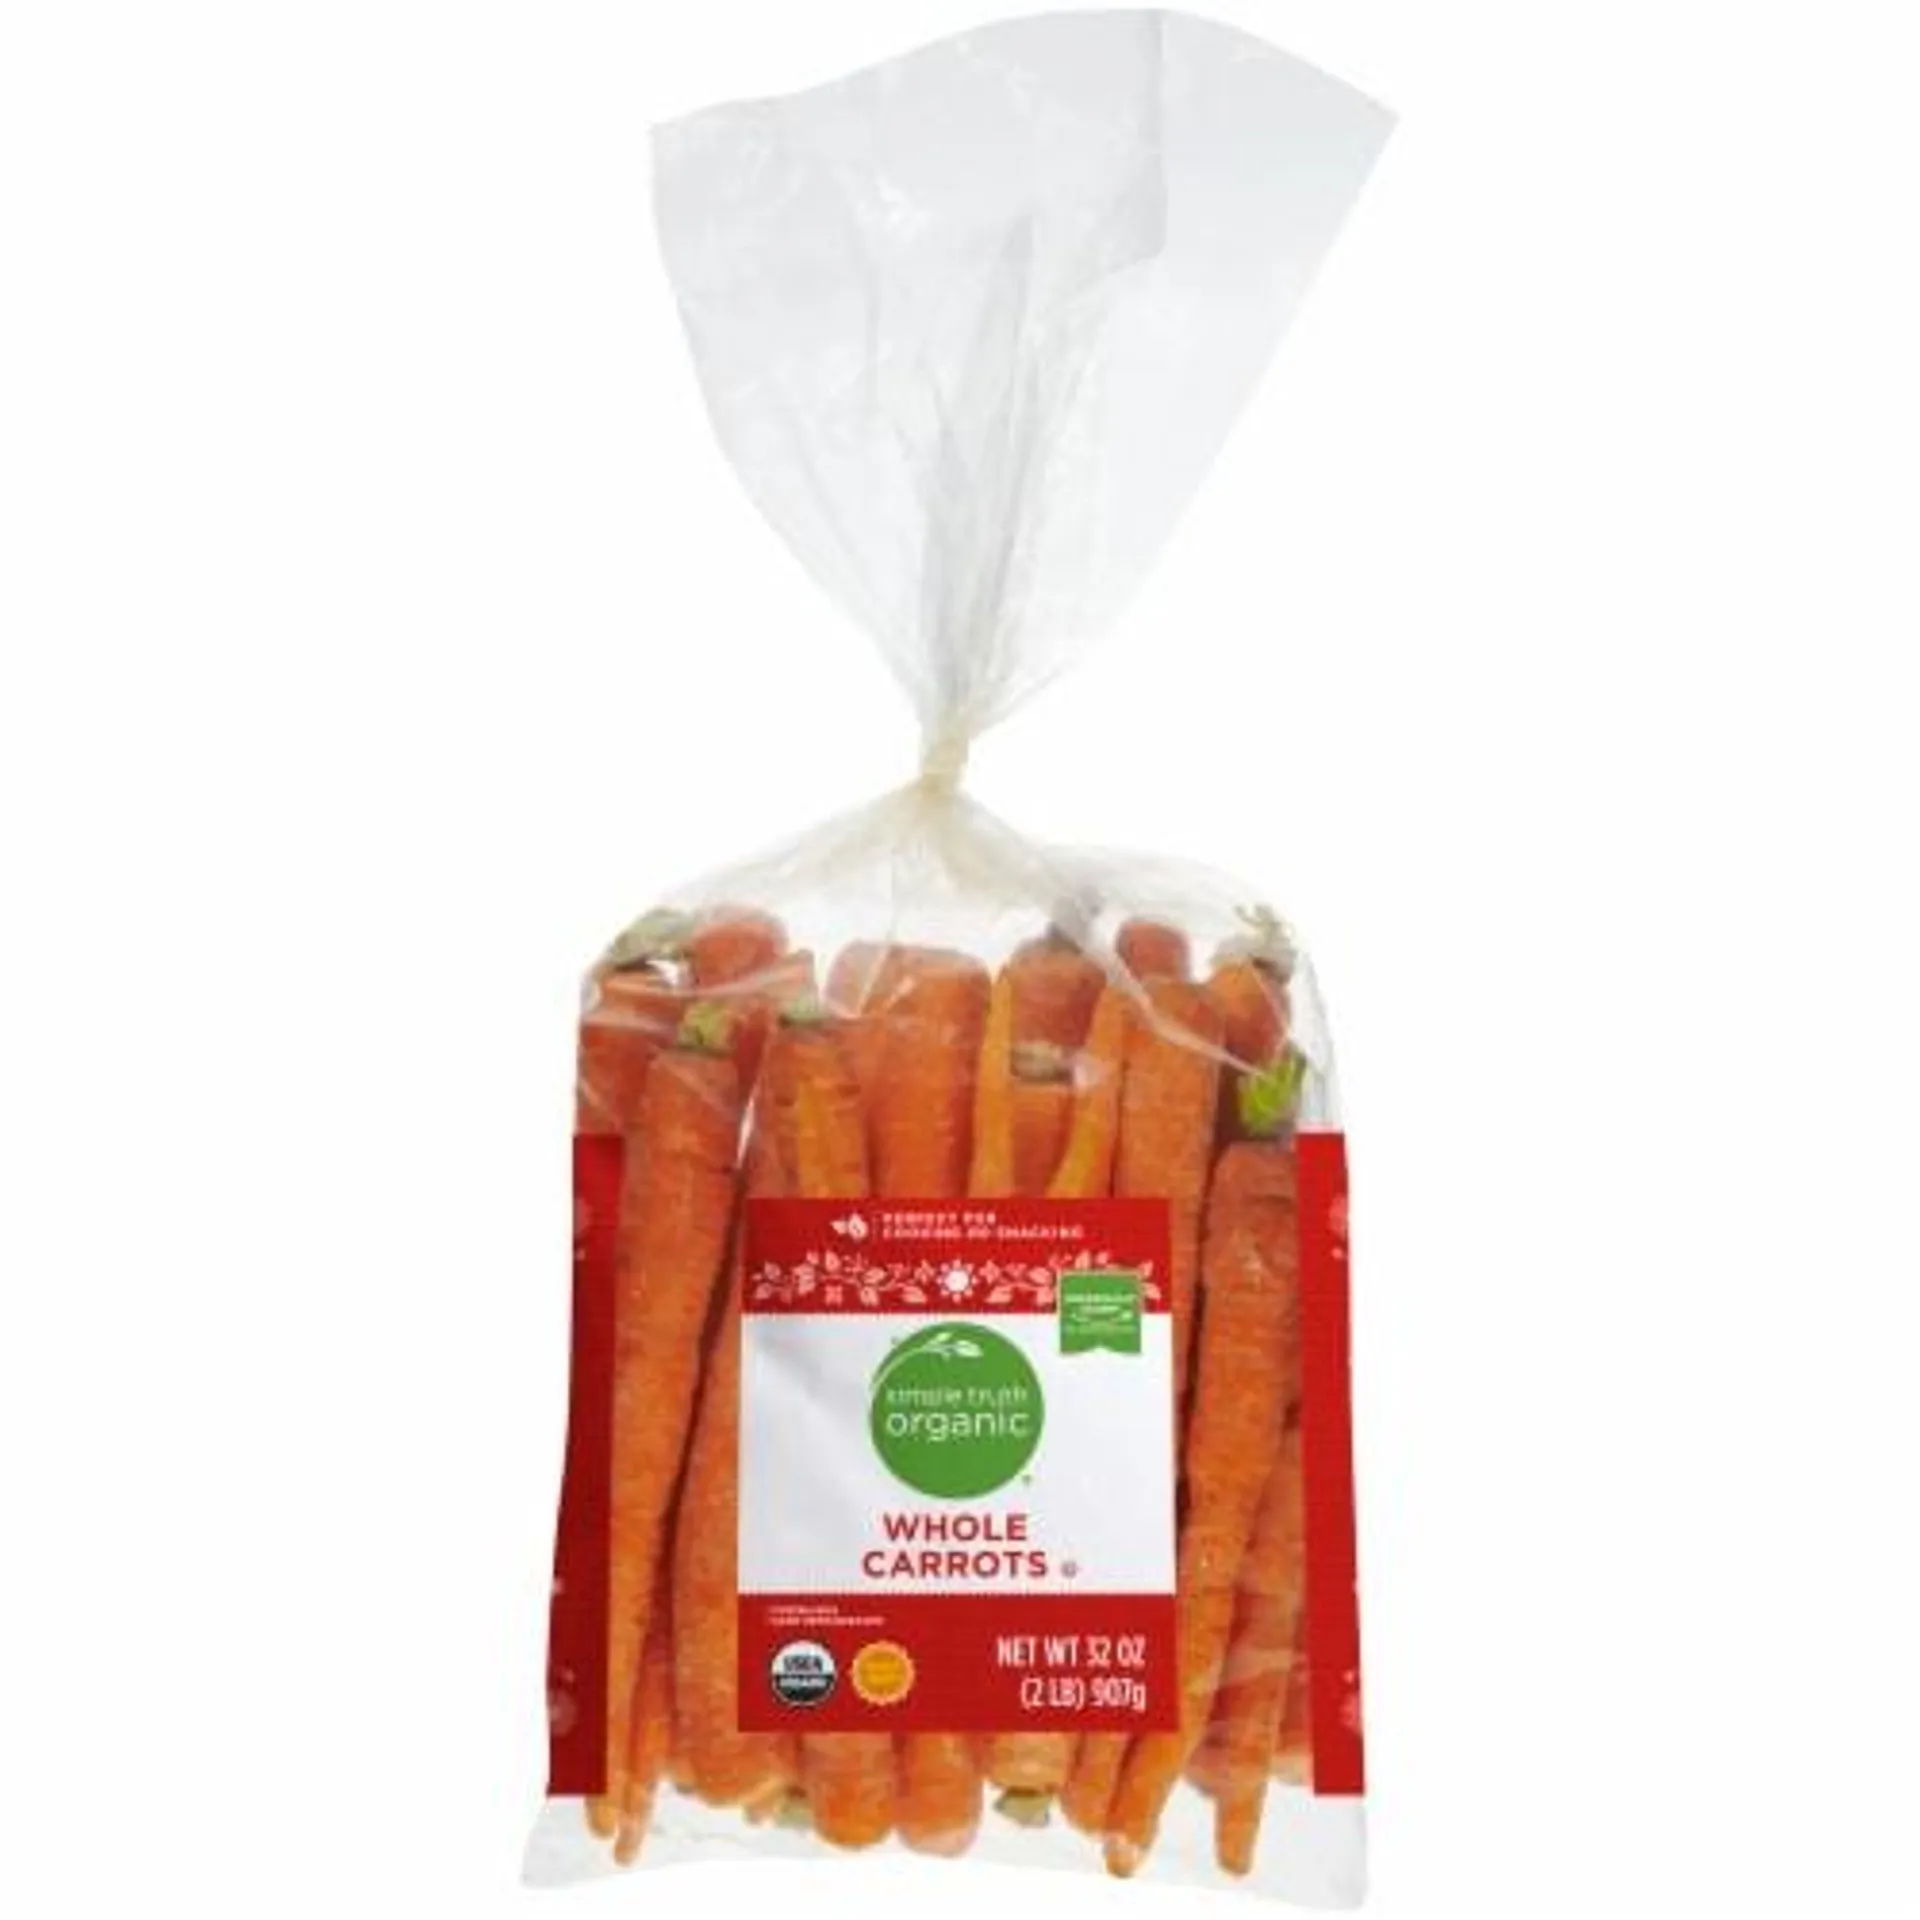 Simple Truth Organic® Whole Carrots Bag